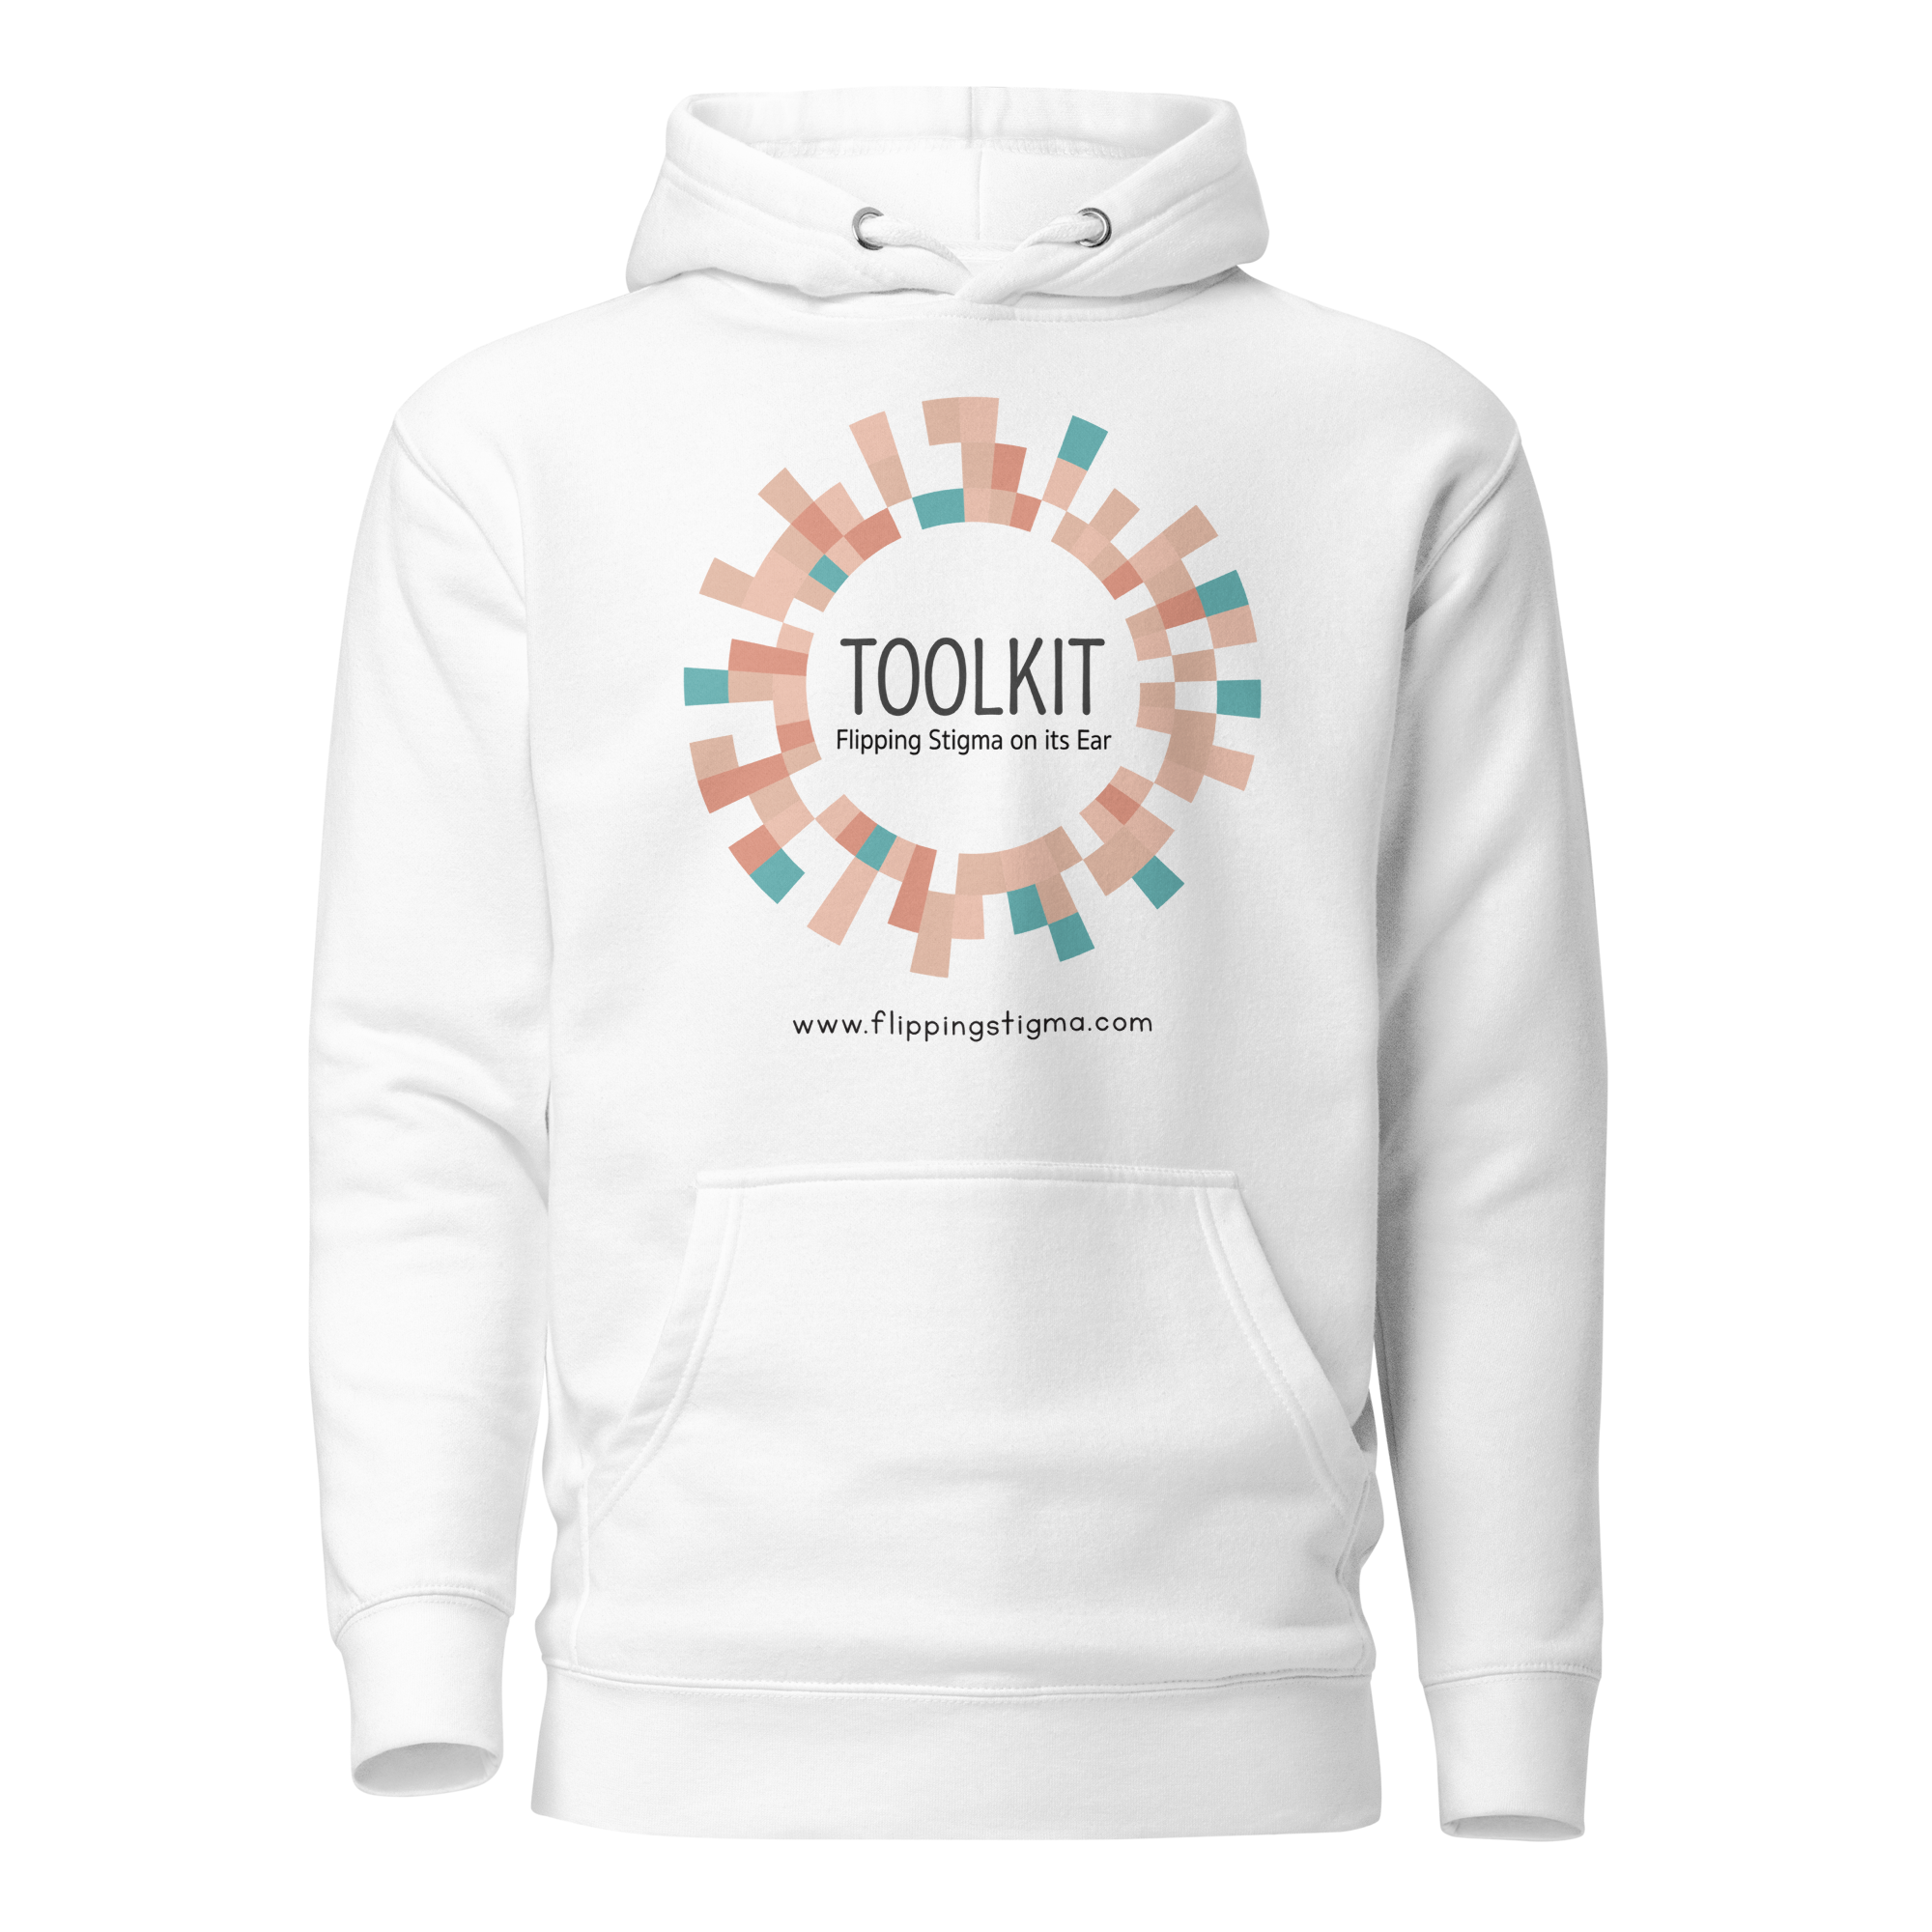 Hoodie with Tookit logo